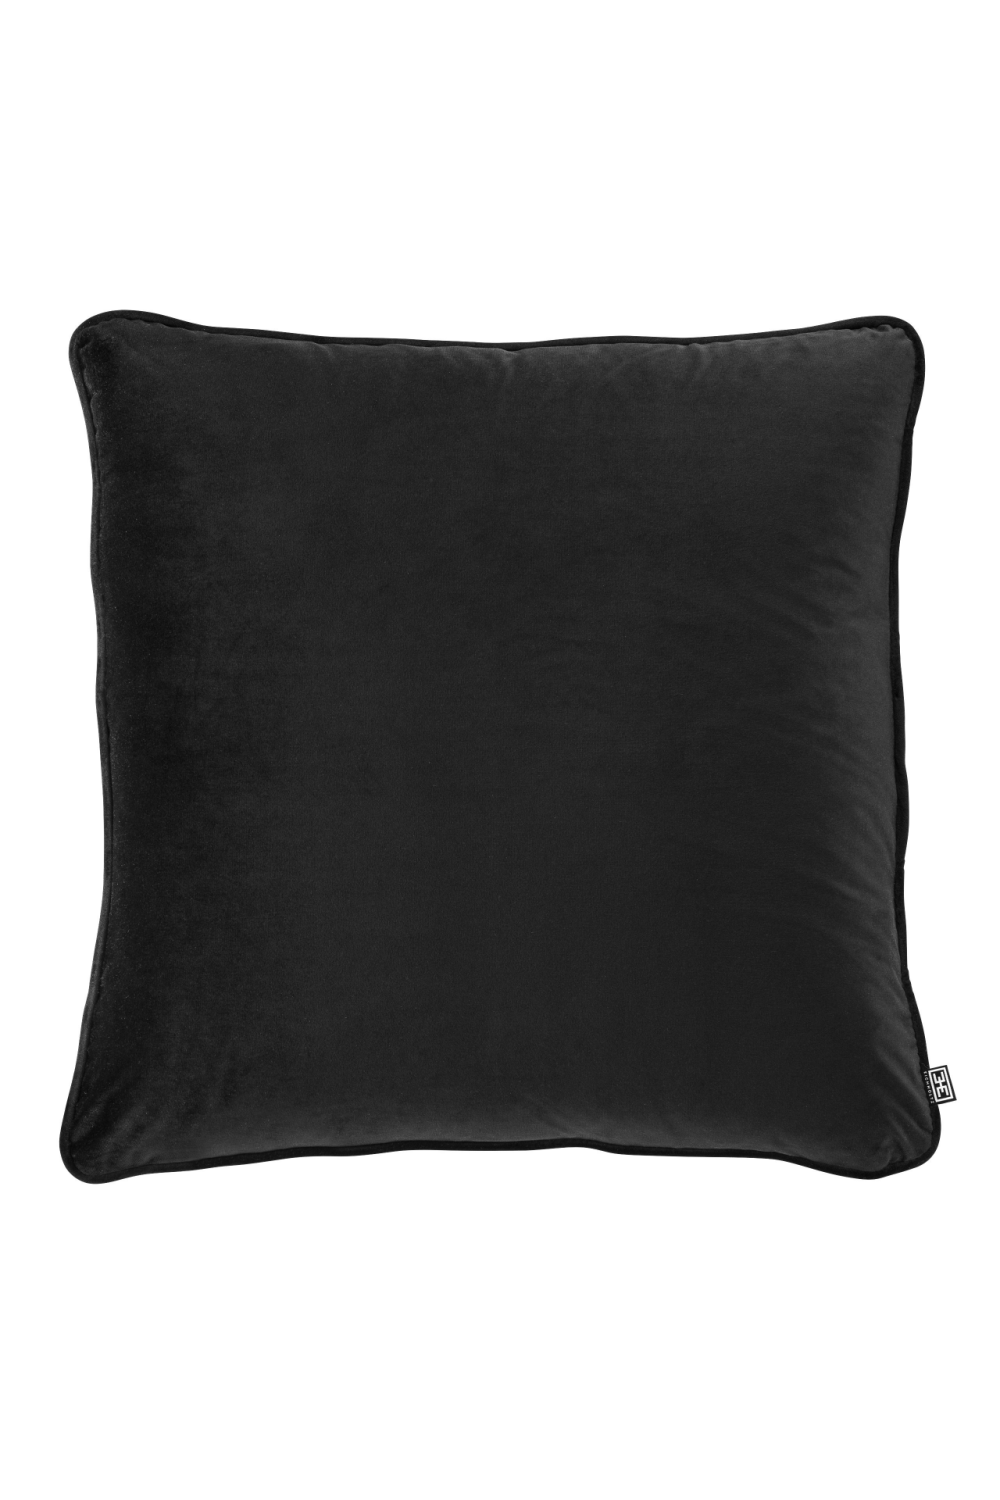 Black Square Pillow | Eichholtz Roche | OROA